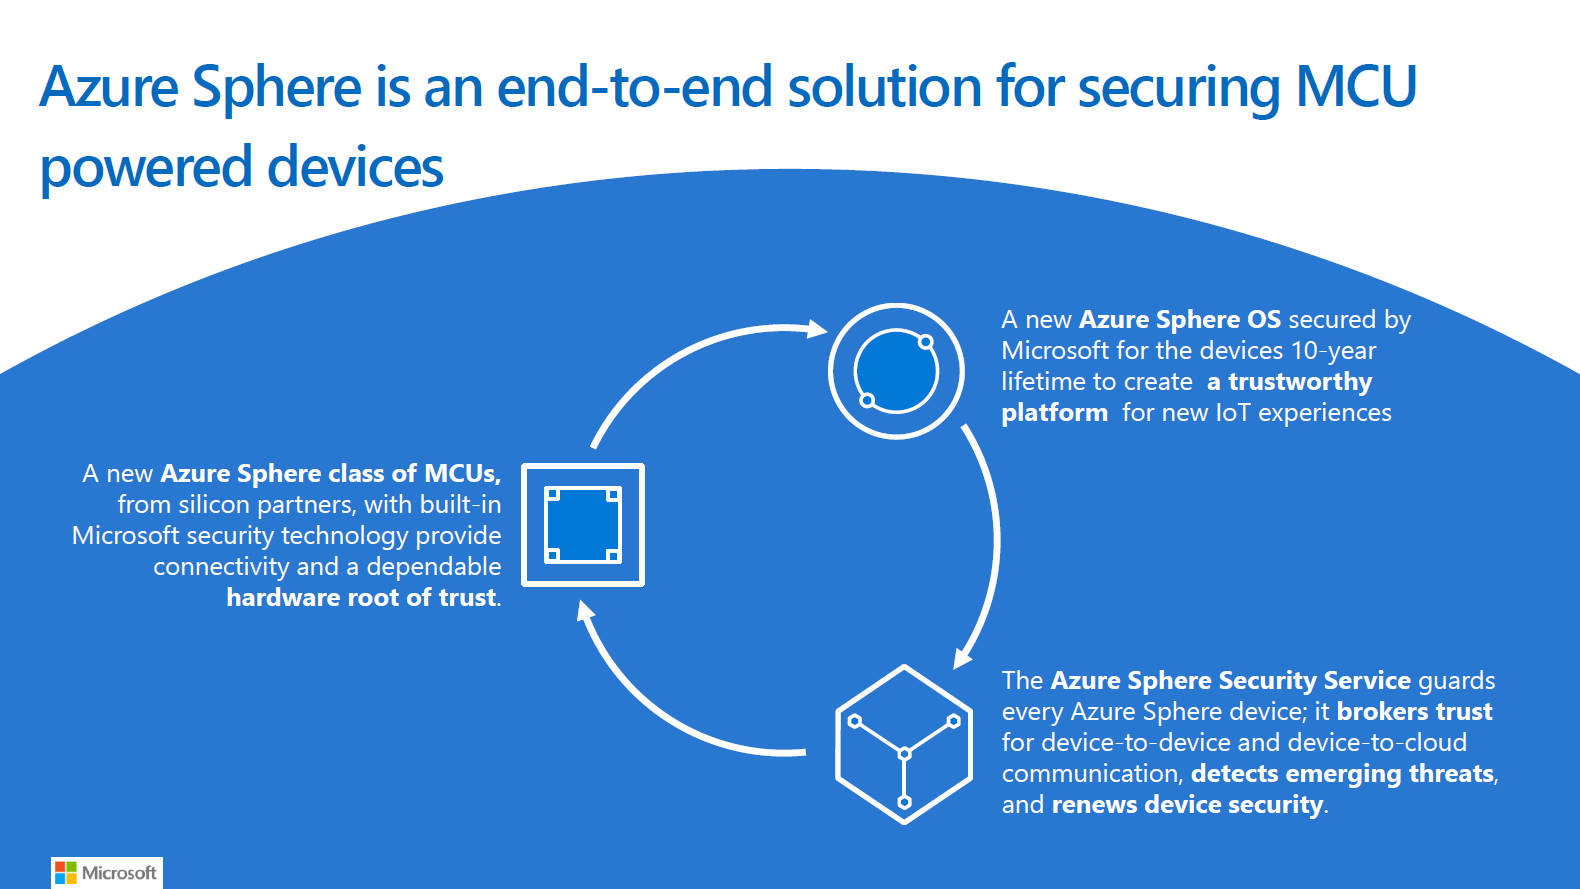 照片中提到了Azure Sphere is an end-to-end solution for securing MCU、powered devices、A new Azure Sphere OS secured by，包含了在線廣告、產品、牌、微軟公司、天藍色球體